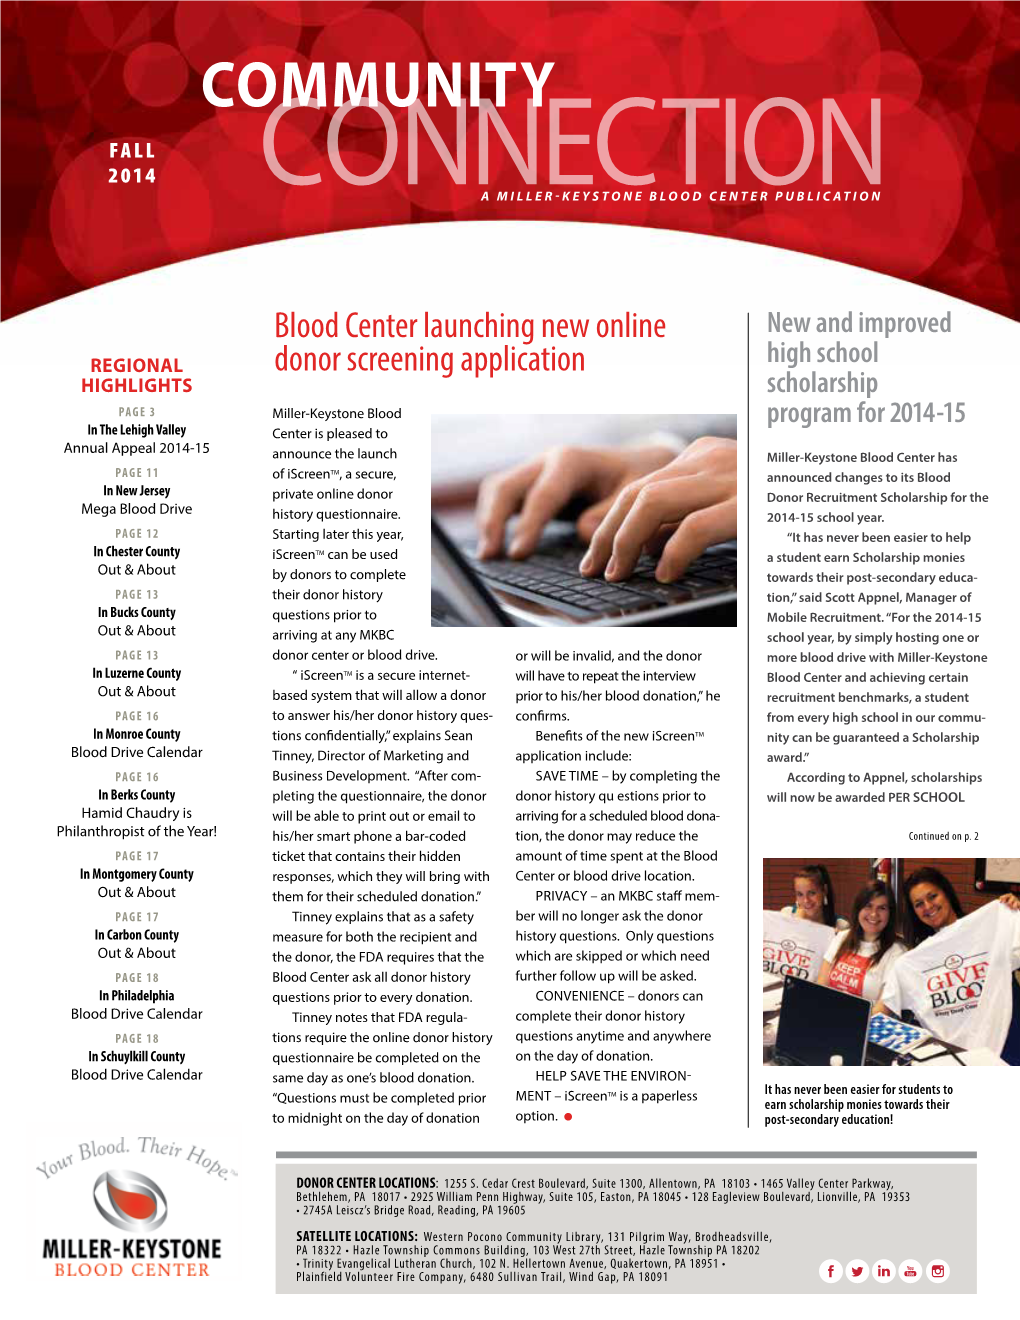 Community Fall 2014 Connectiona Miller-Keystone Blood Center Publication